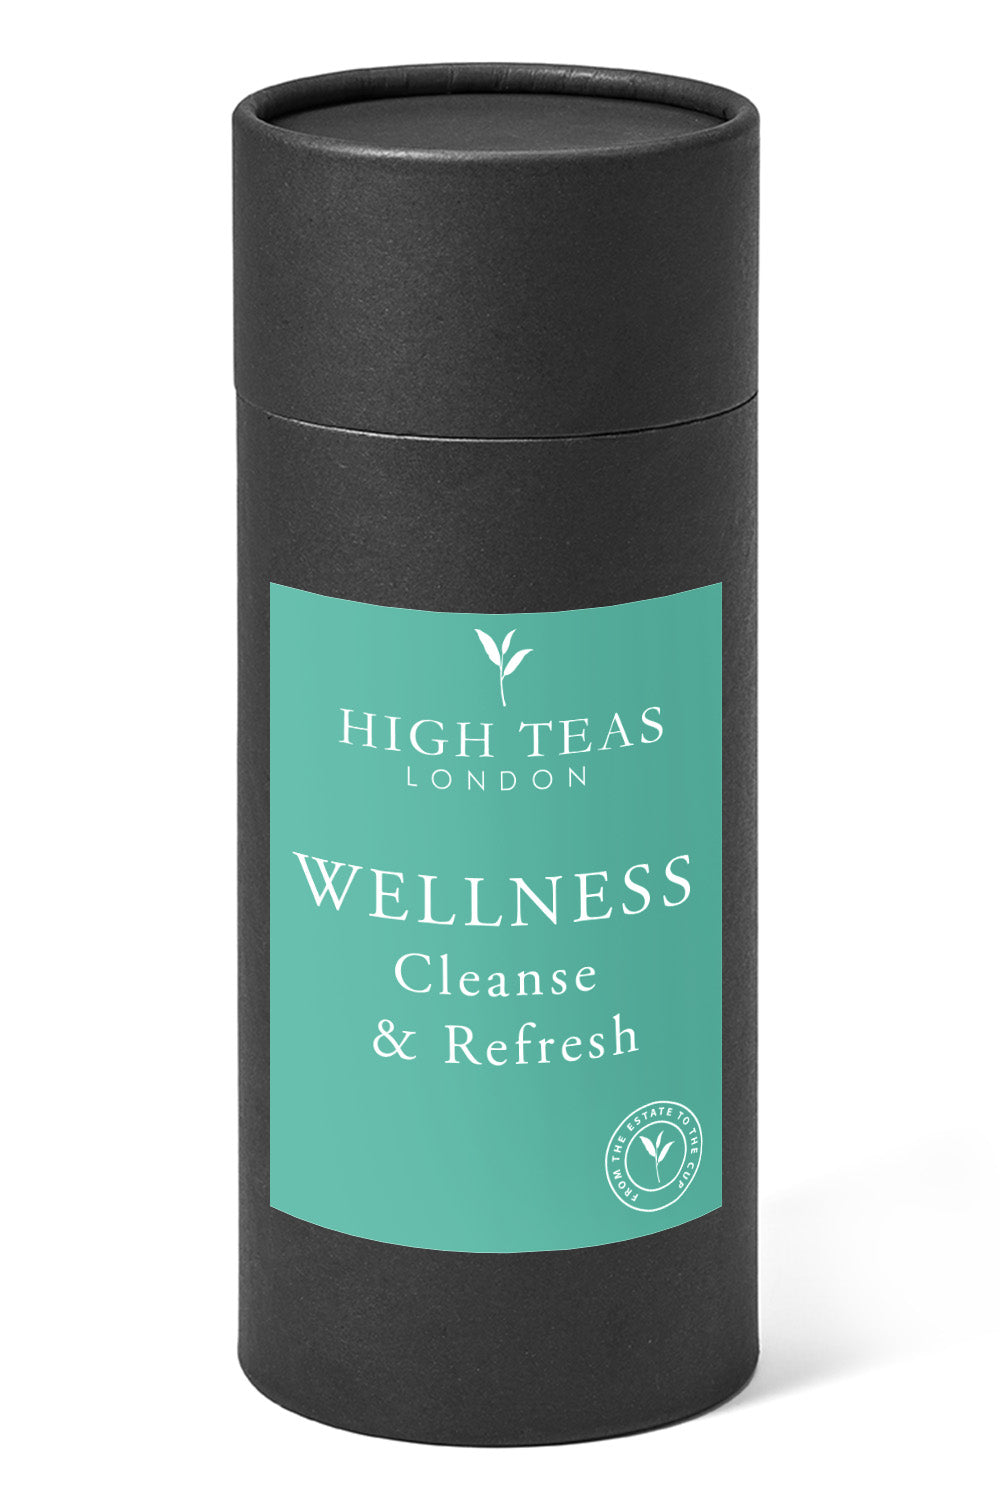 Cleanse and Refresh-150g gift-Loose Leaf Tea-High Teas